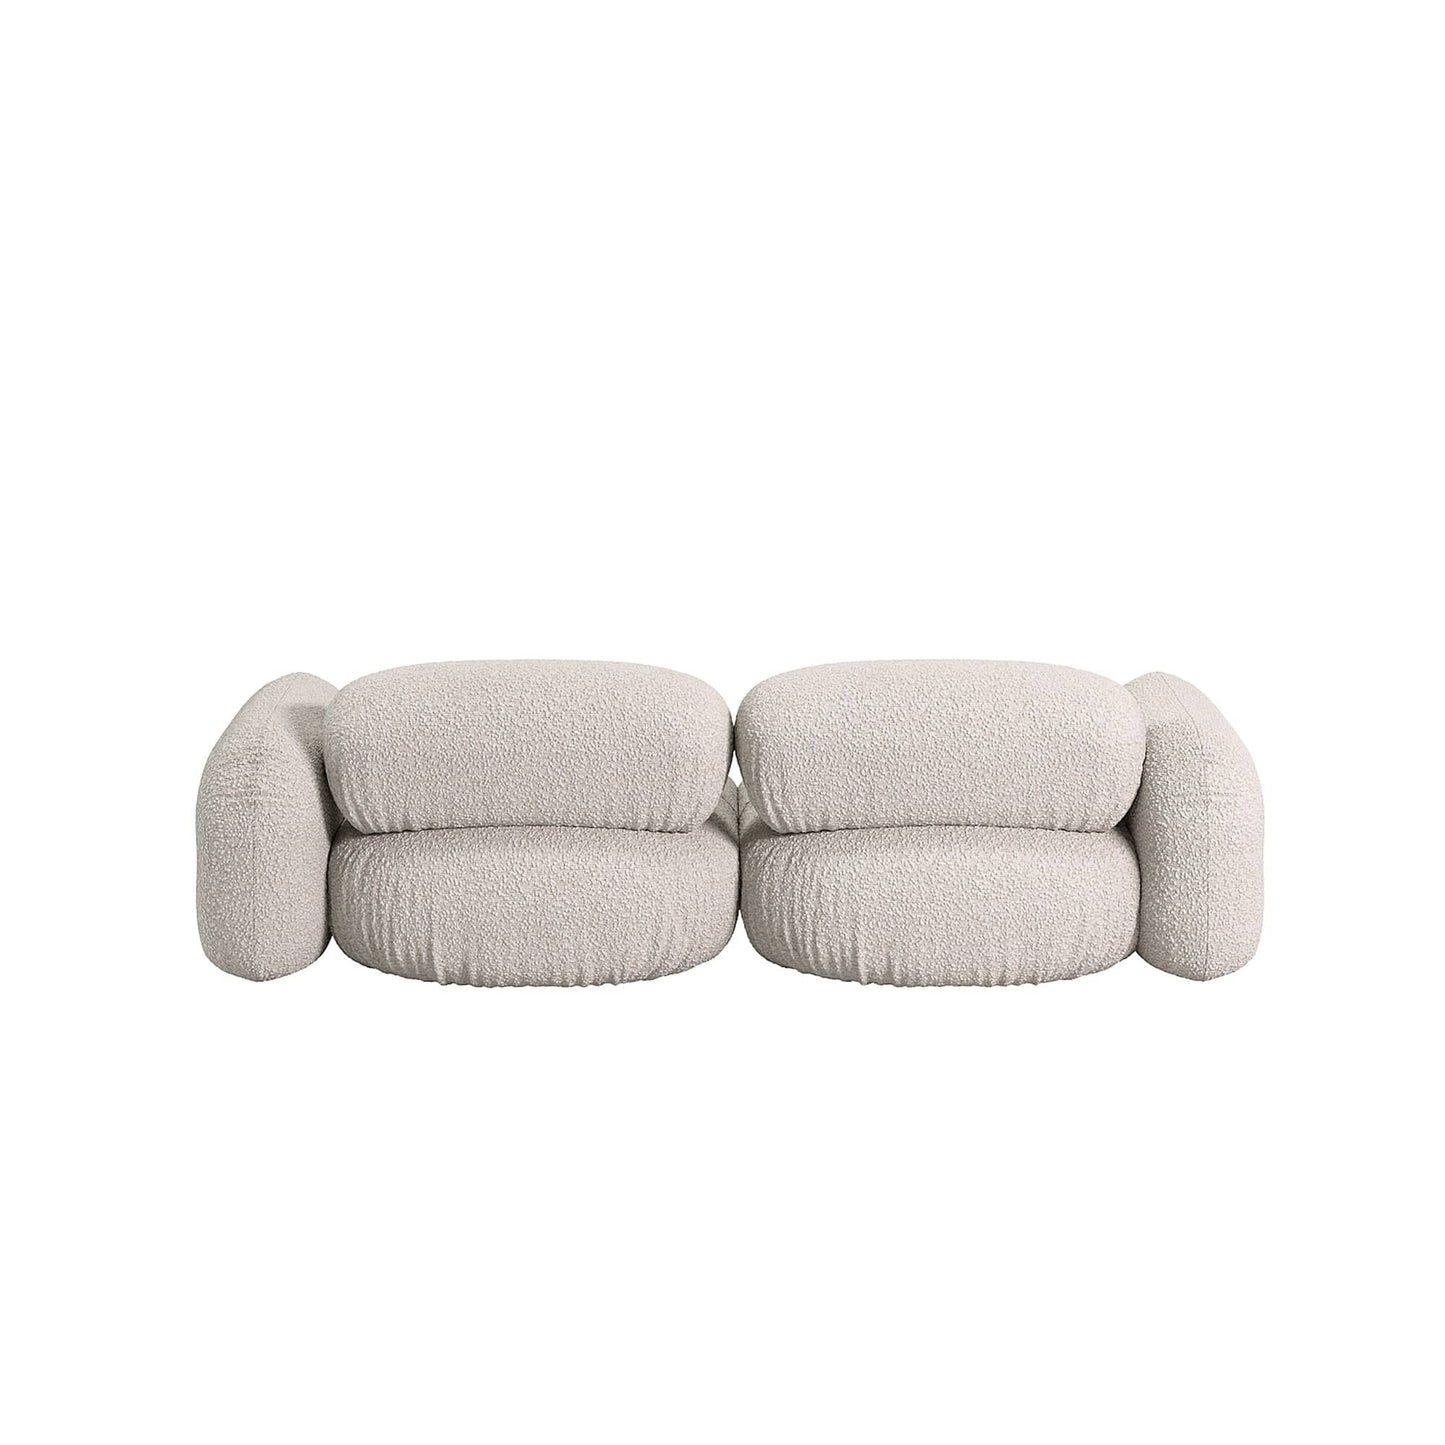 Ondo 3 Seater Sofa - Maya Cream Boucle